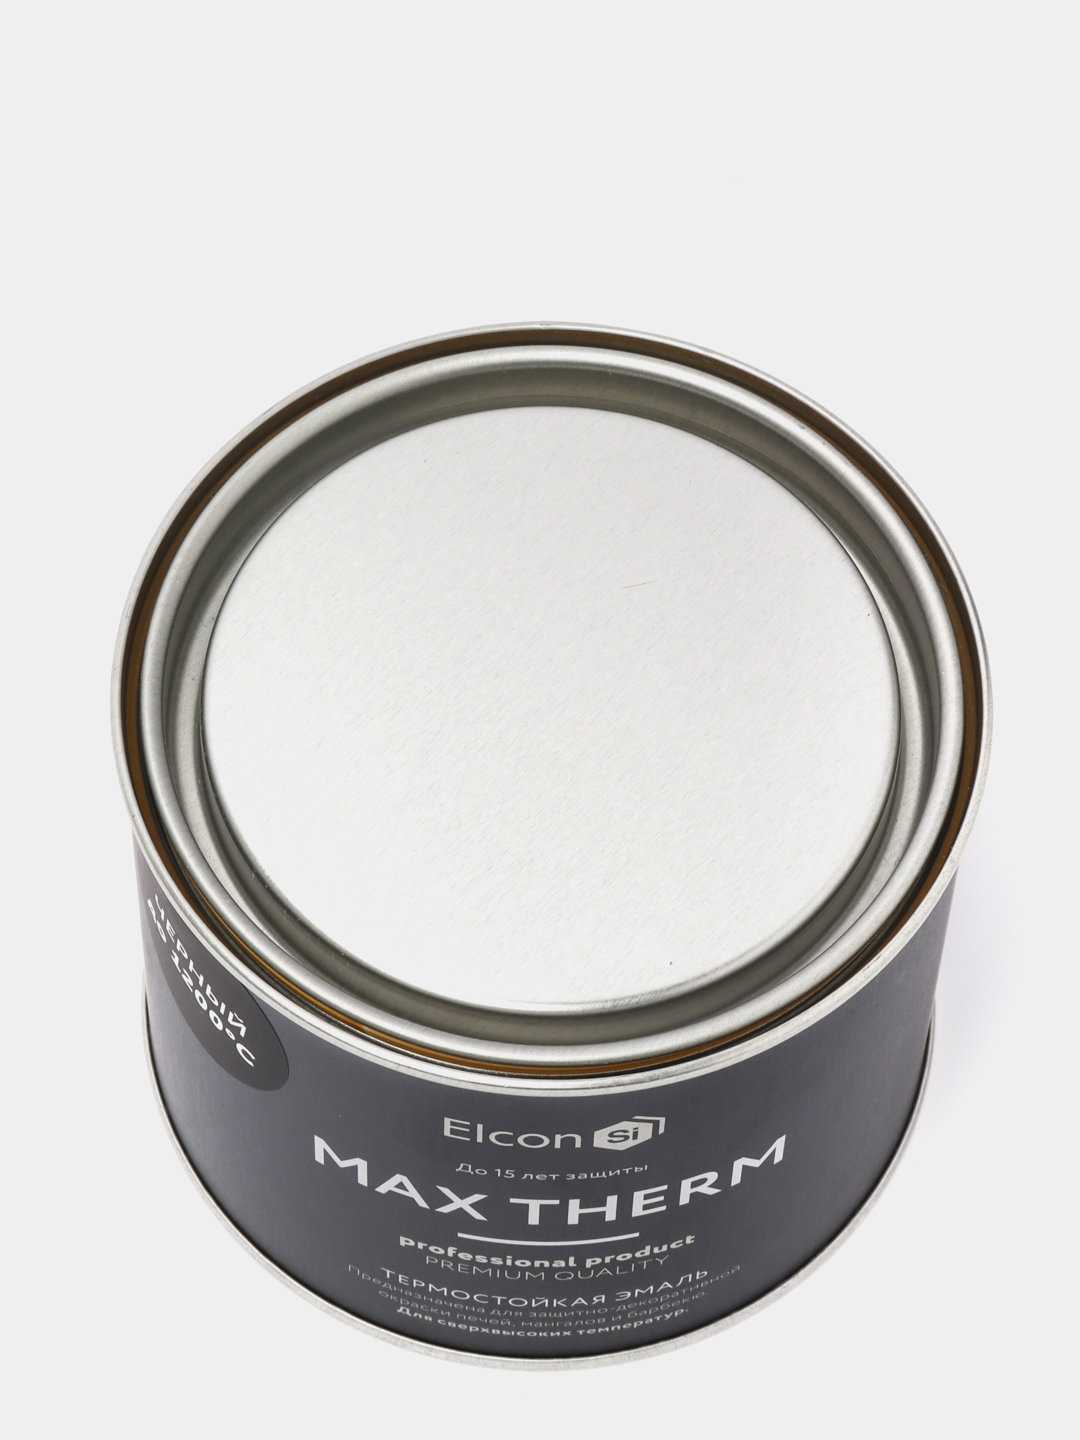  краска Elcon Max Therm черная до 1200 градусов 0,4 кг за .